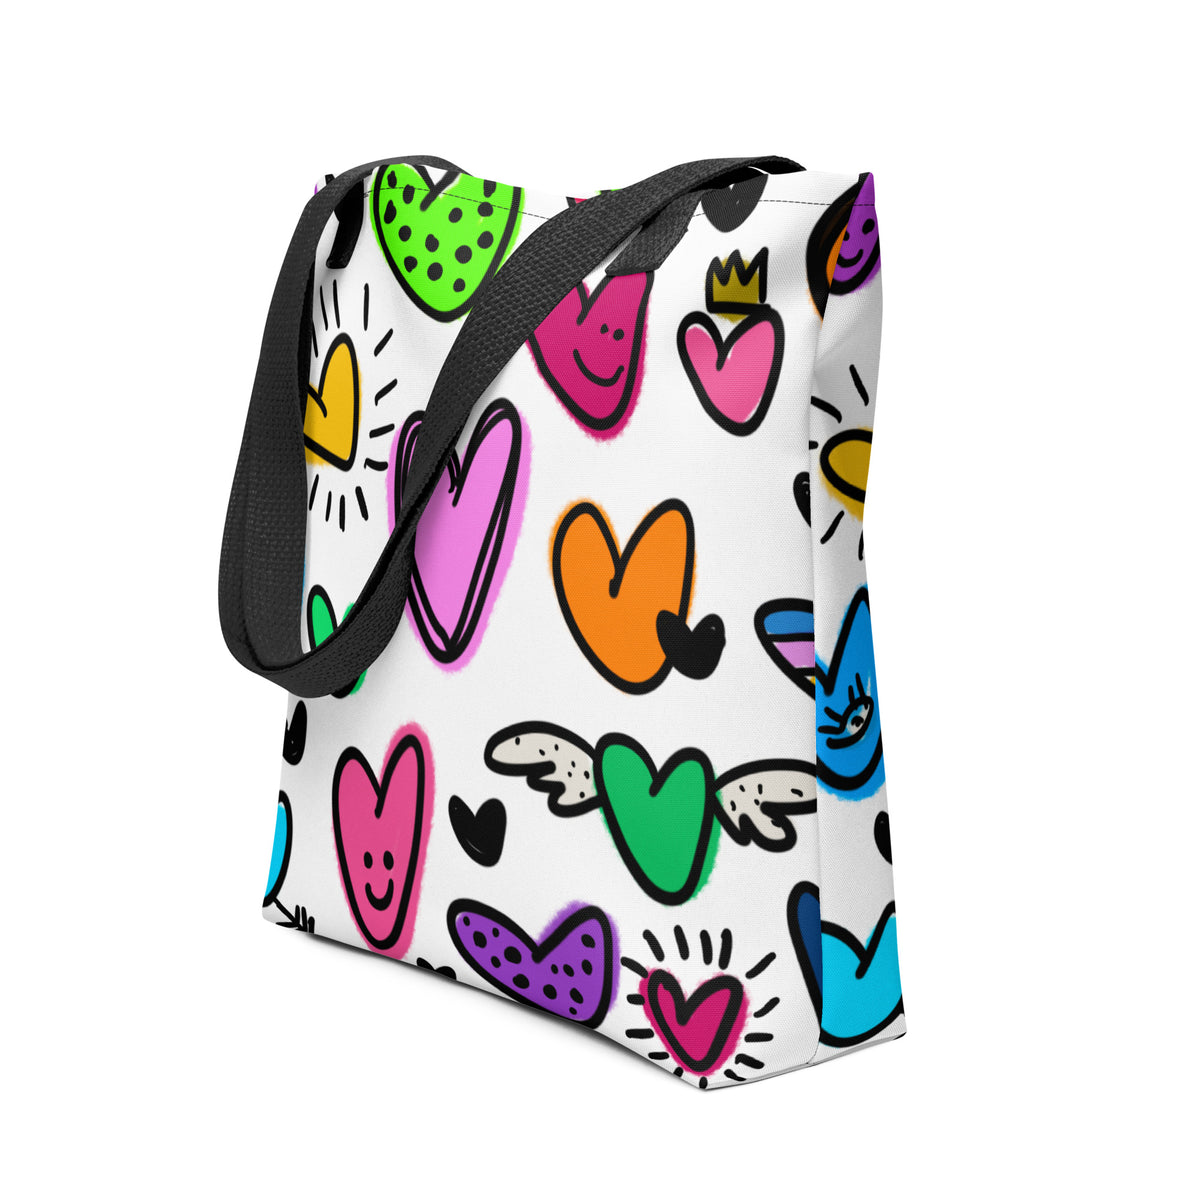 Cute Hearts Tote bag